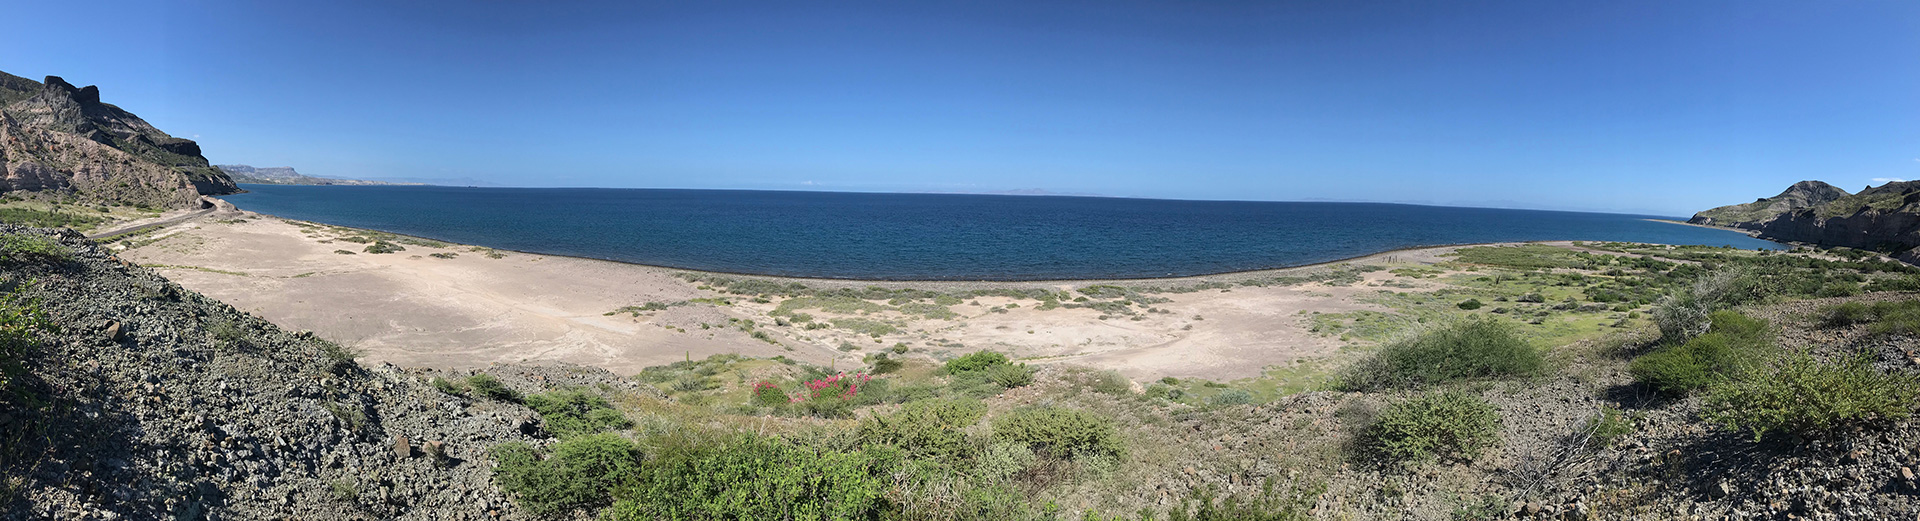 camaron beach shoreline panorama